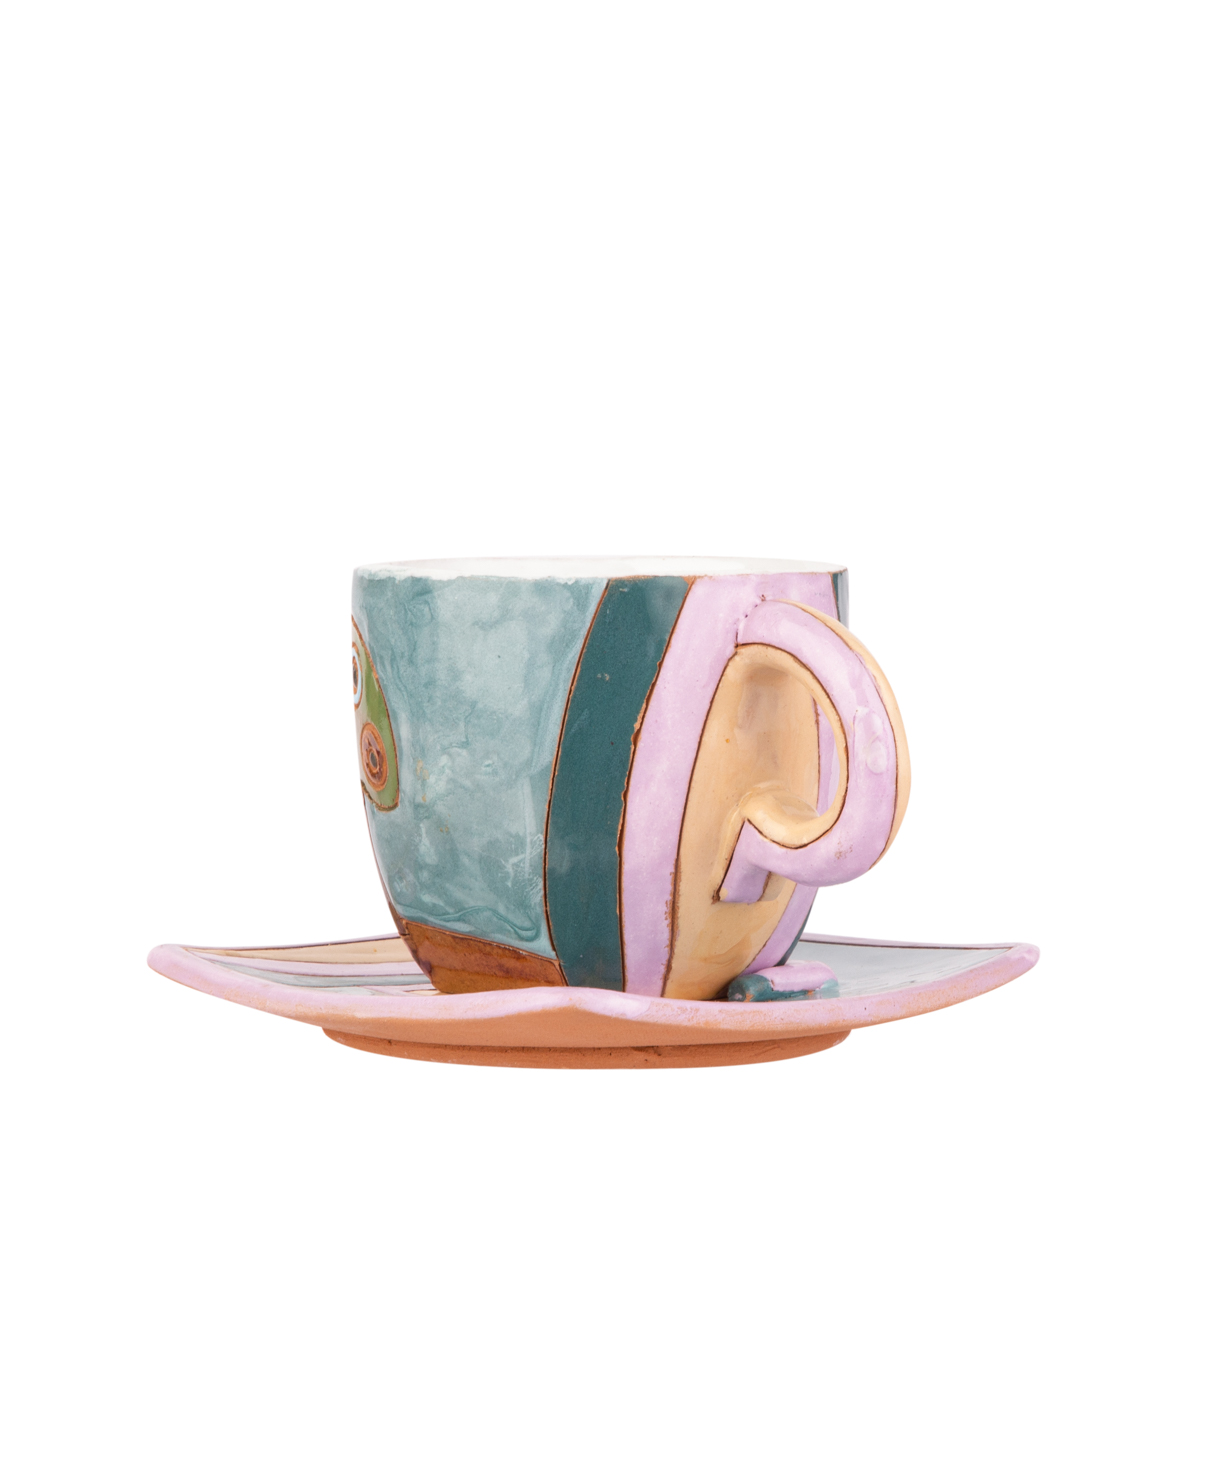 Coffe mug `Nuard Ceramics` City. day-night №2